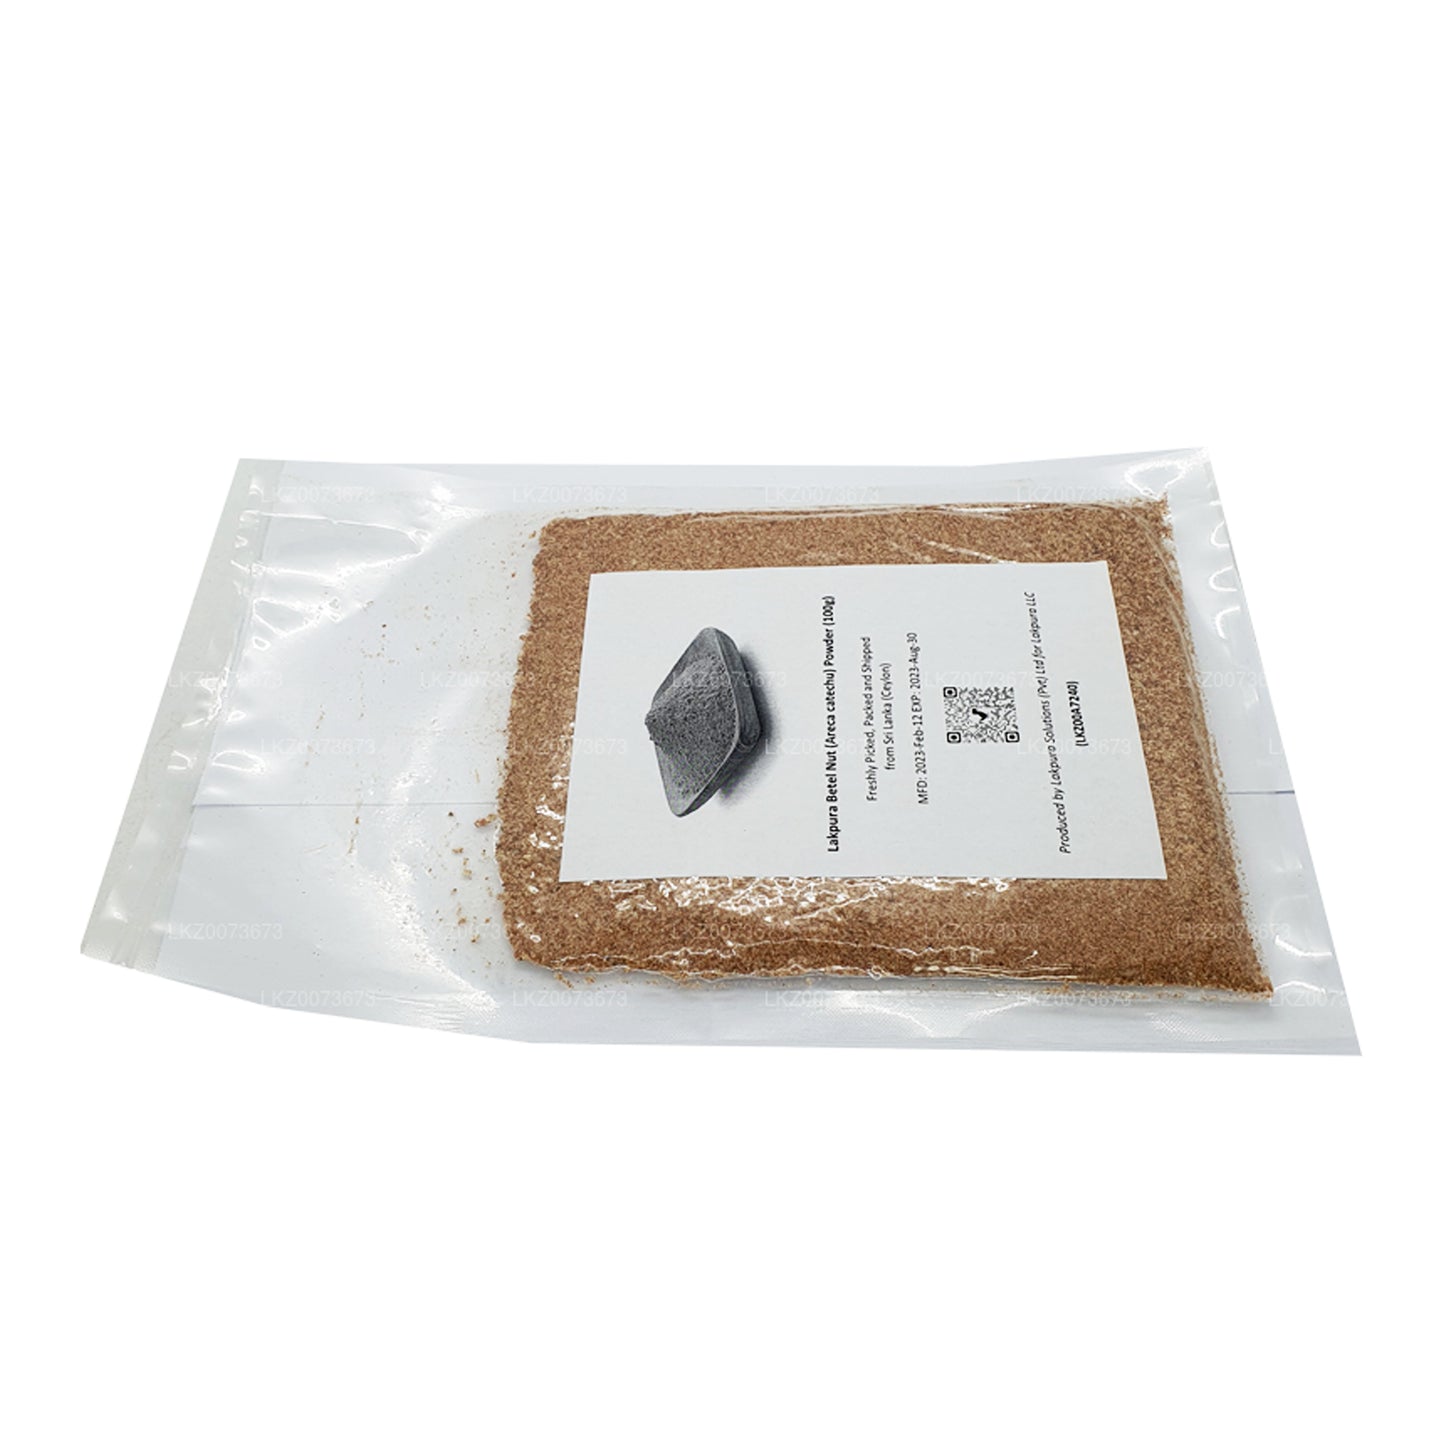 Lakpura Betel Nut (Areca catechu) Powder